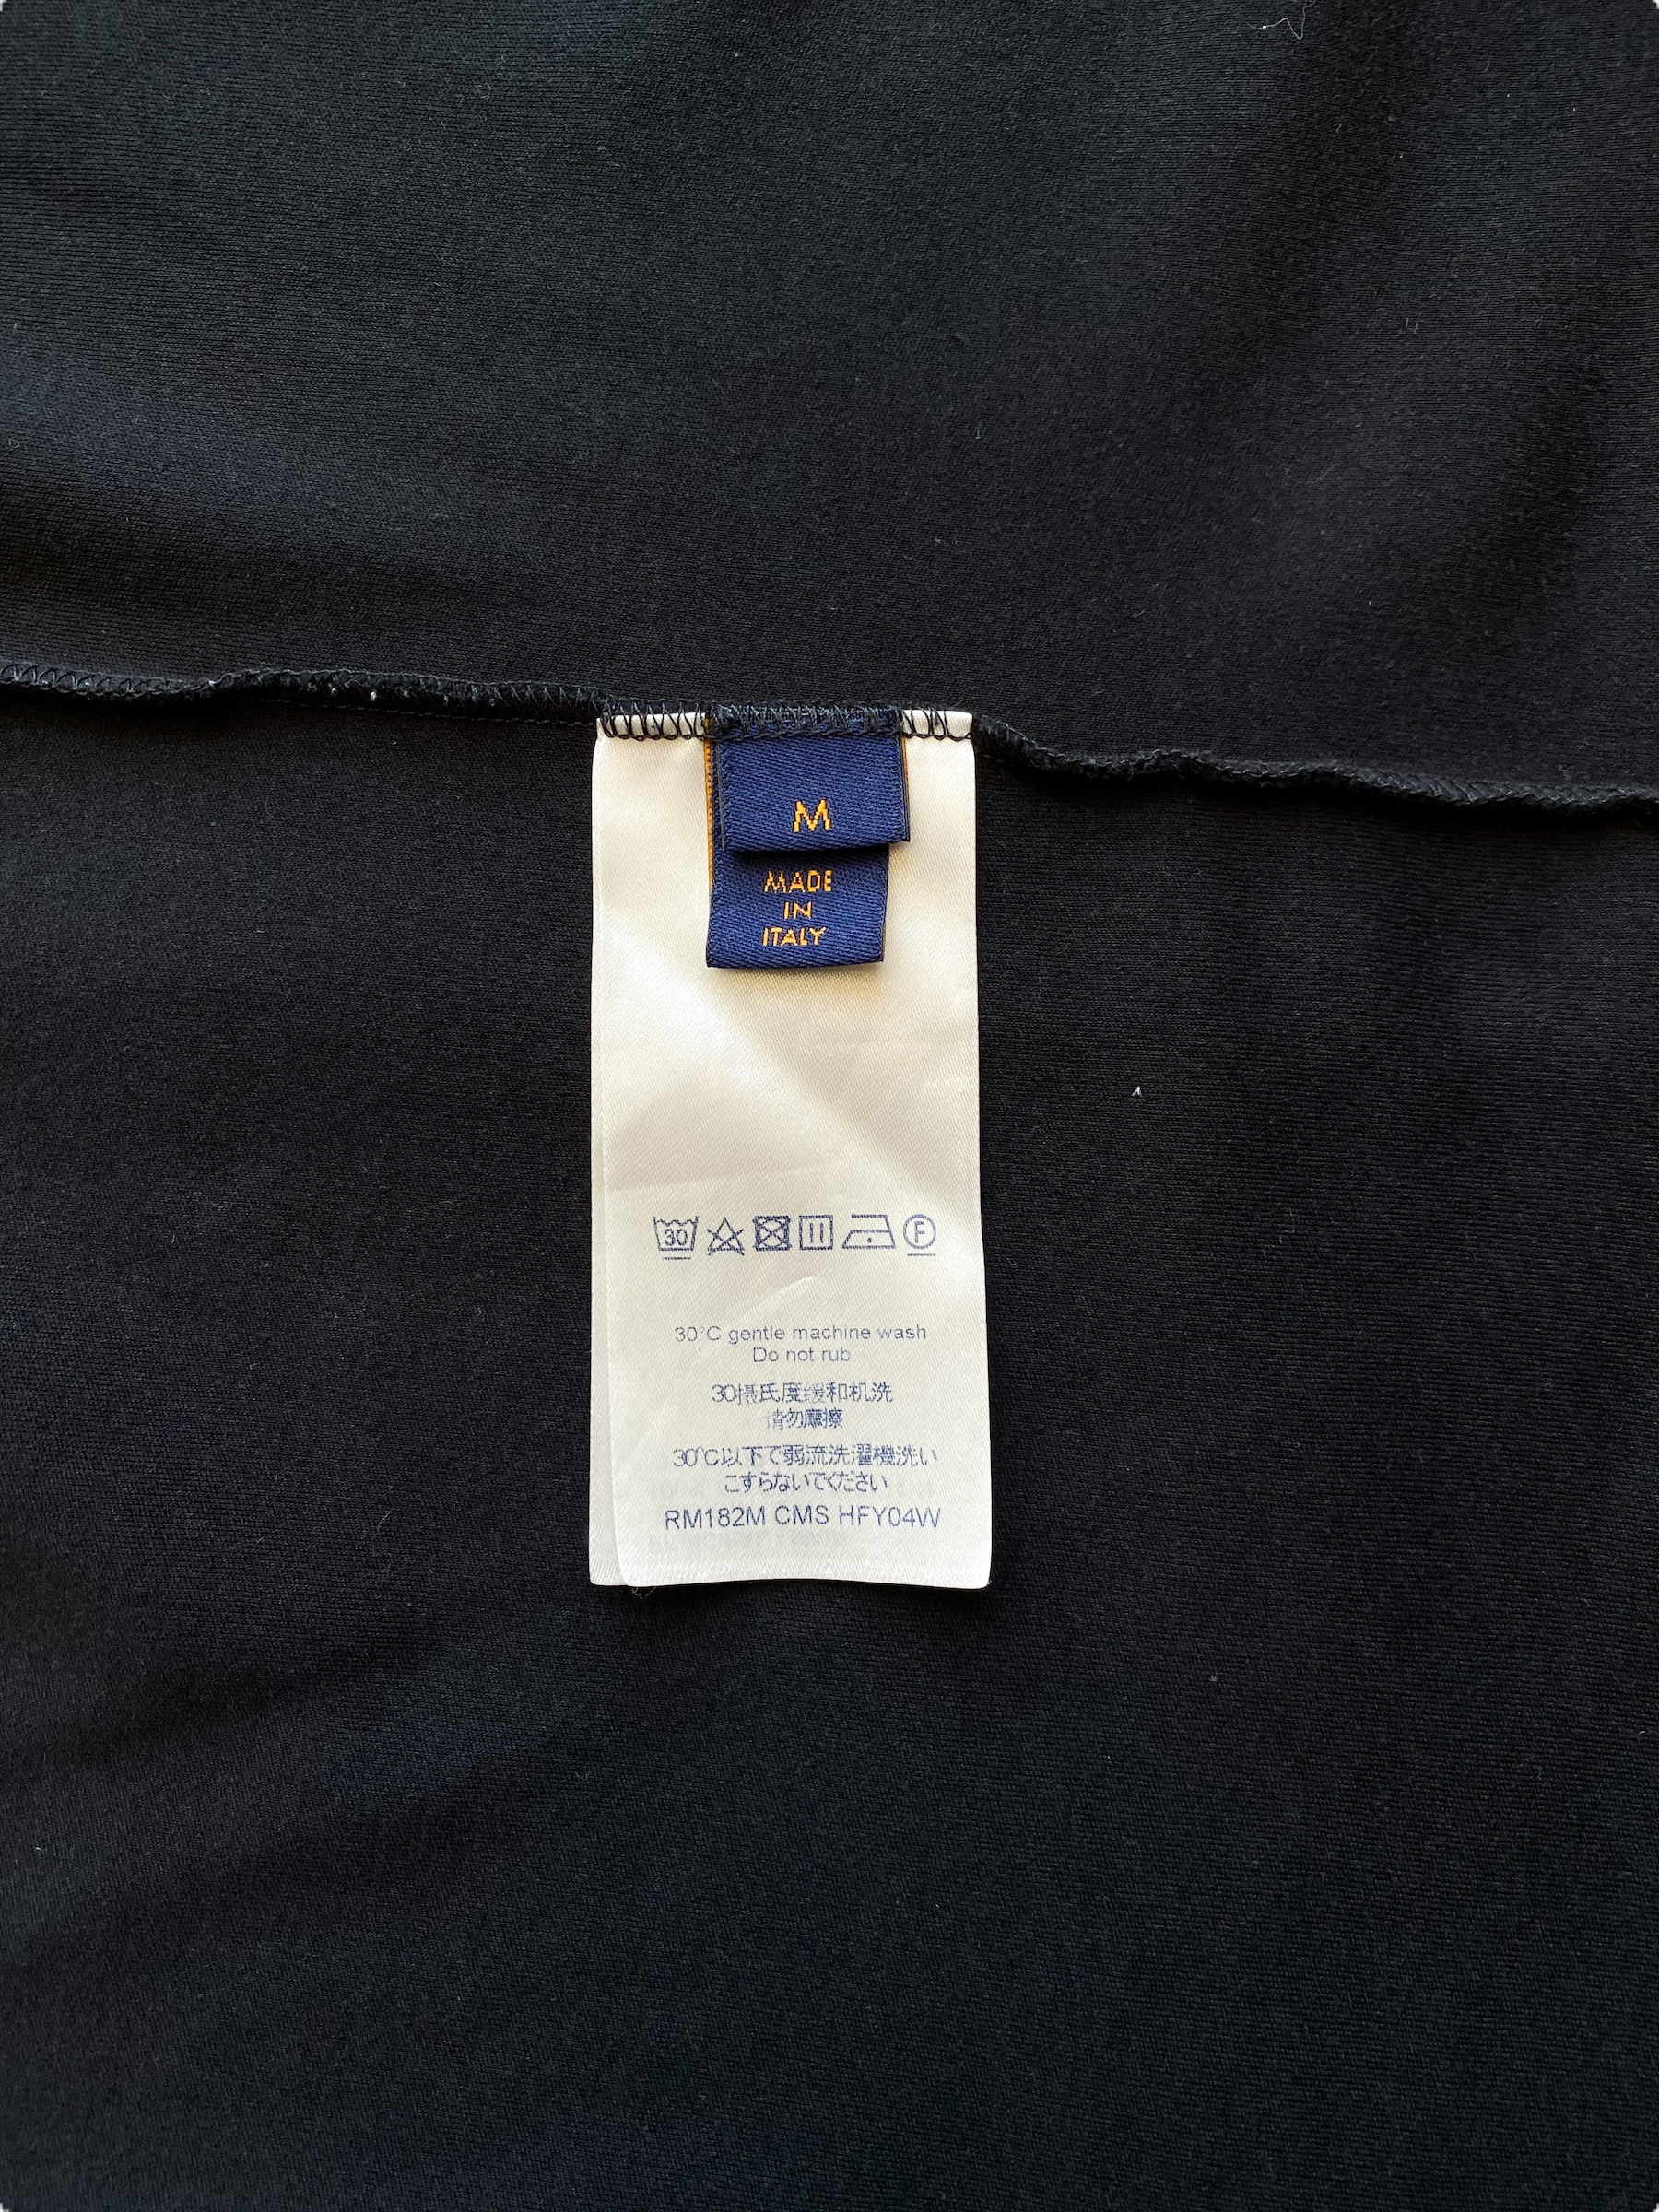 Louis Vuitton Grey Cotton Jersey Upside Down Logo Sweatshirt M